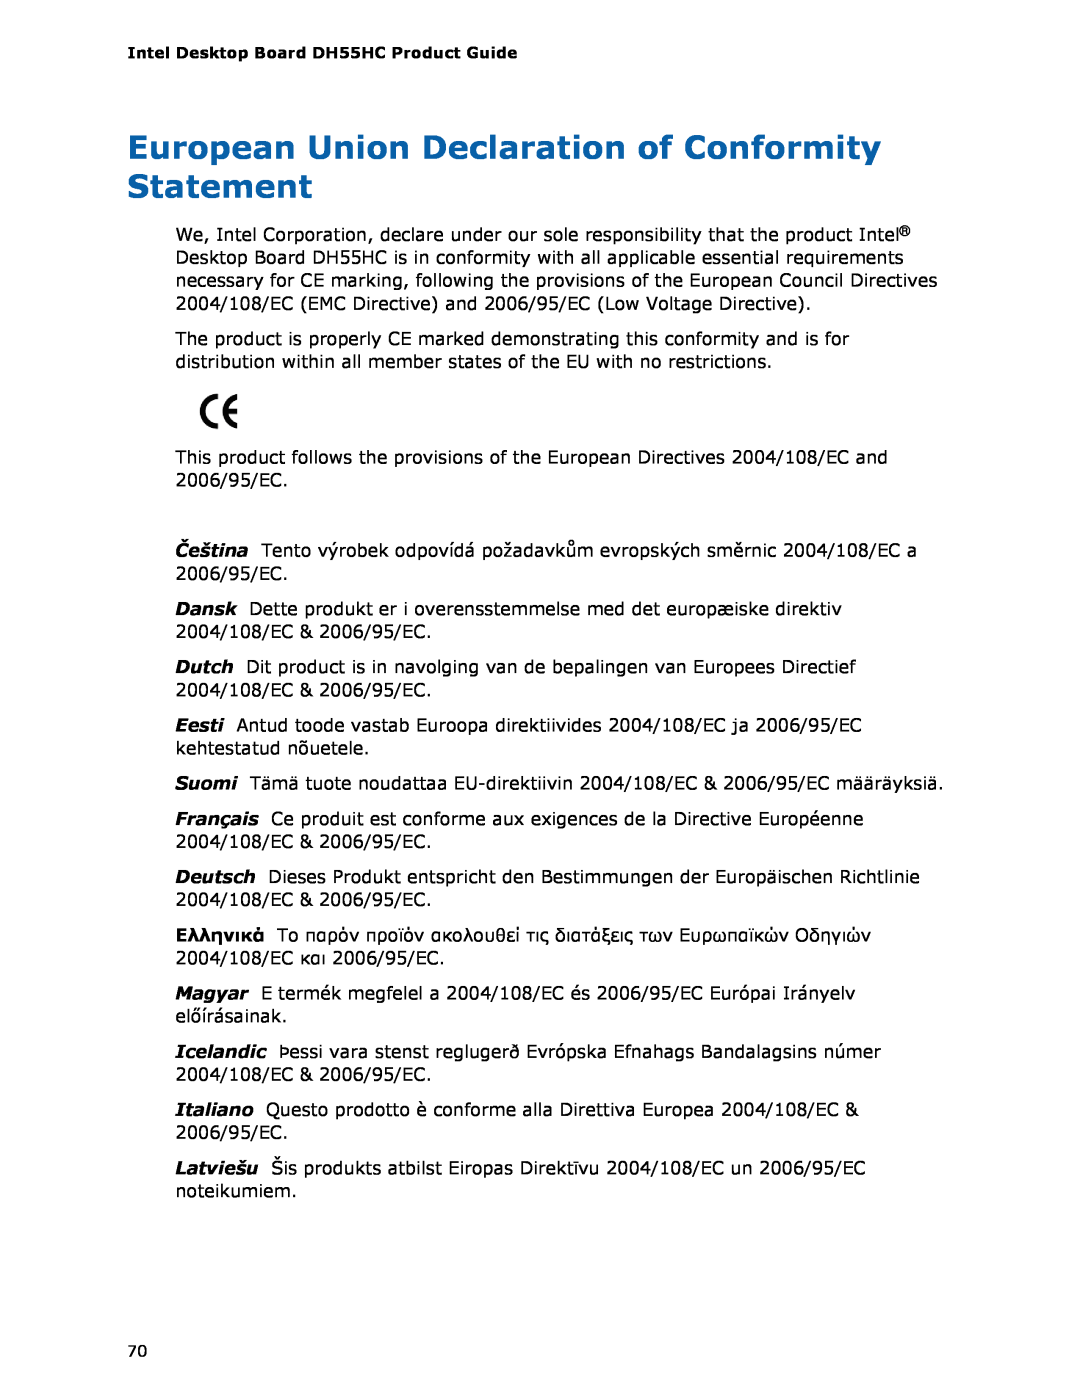 Intel BOXDH55HC manual European Union Declaration of Conformity Statement 